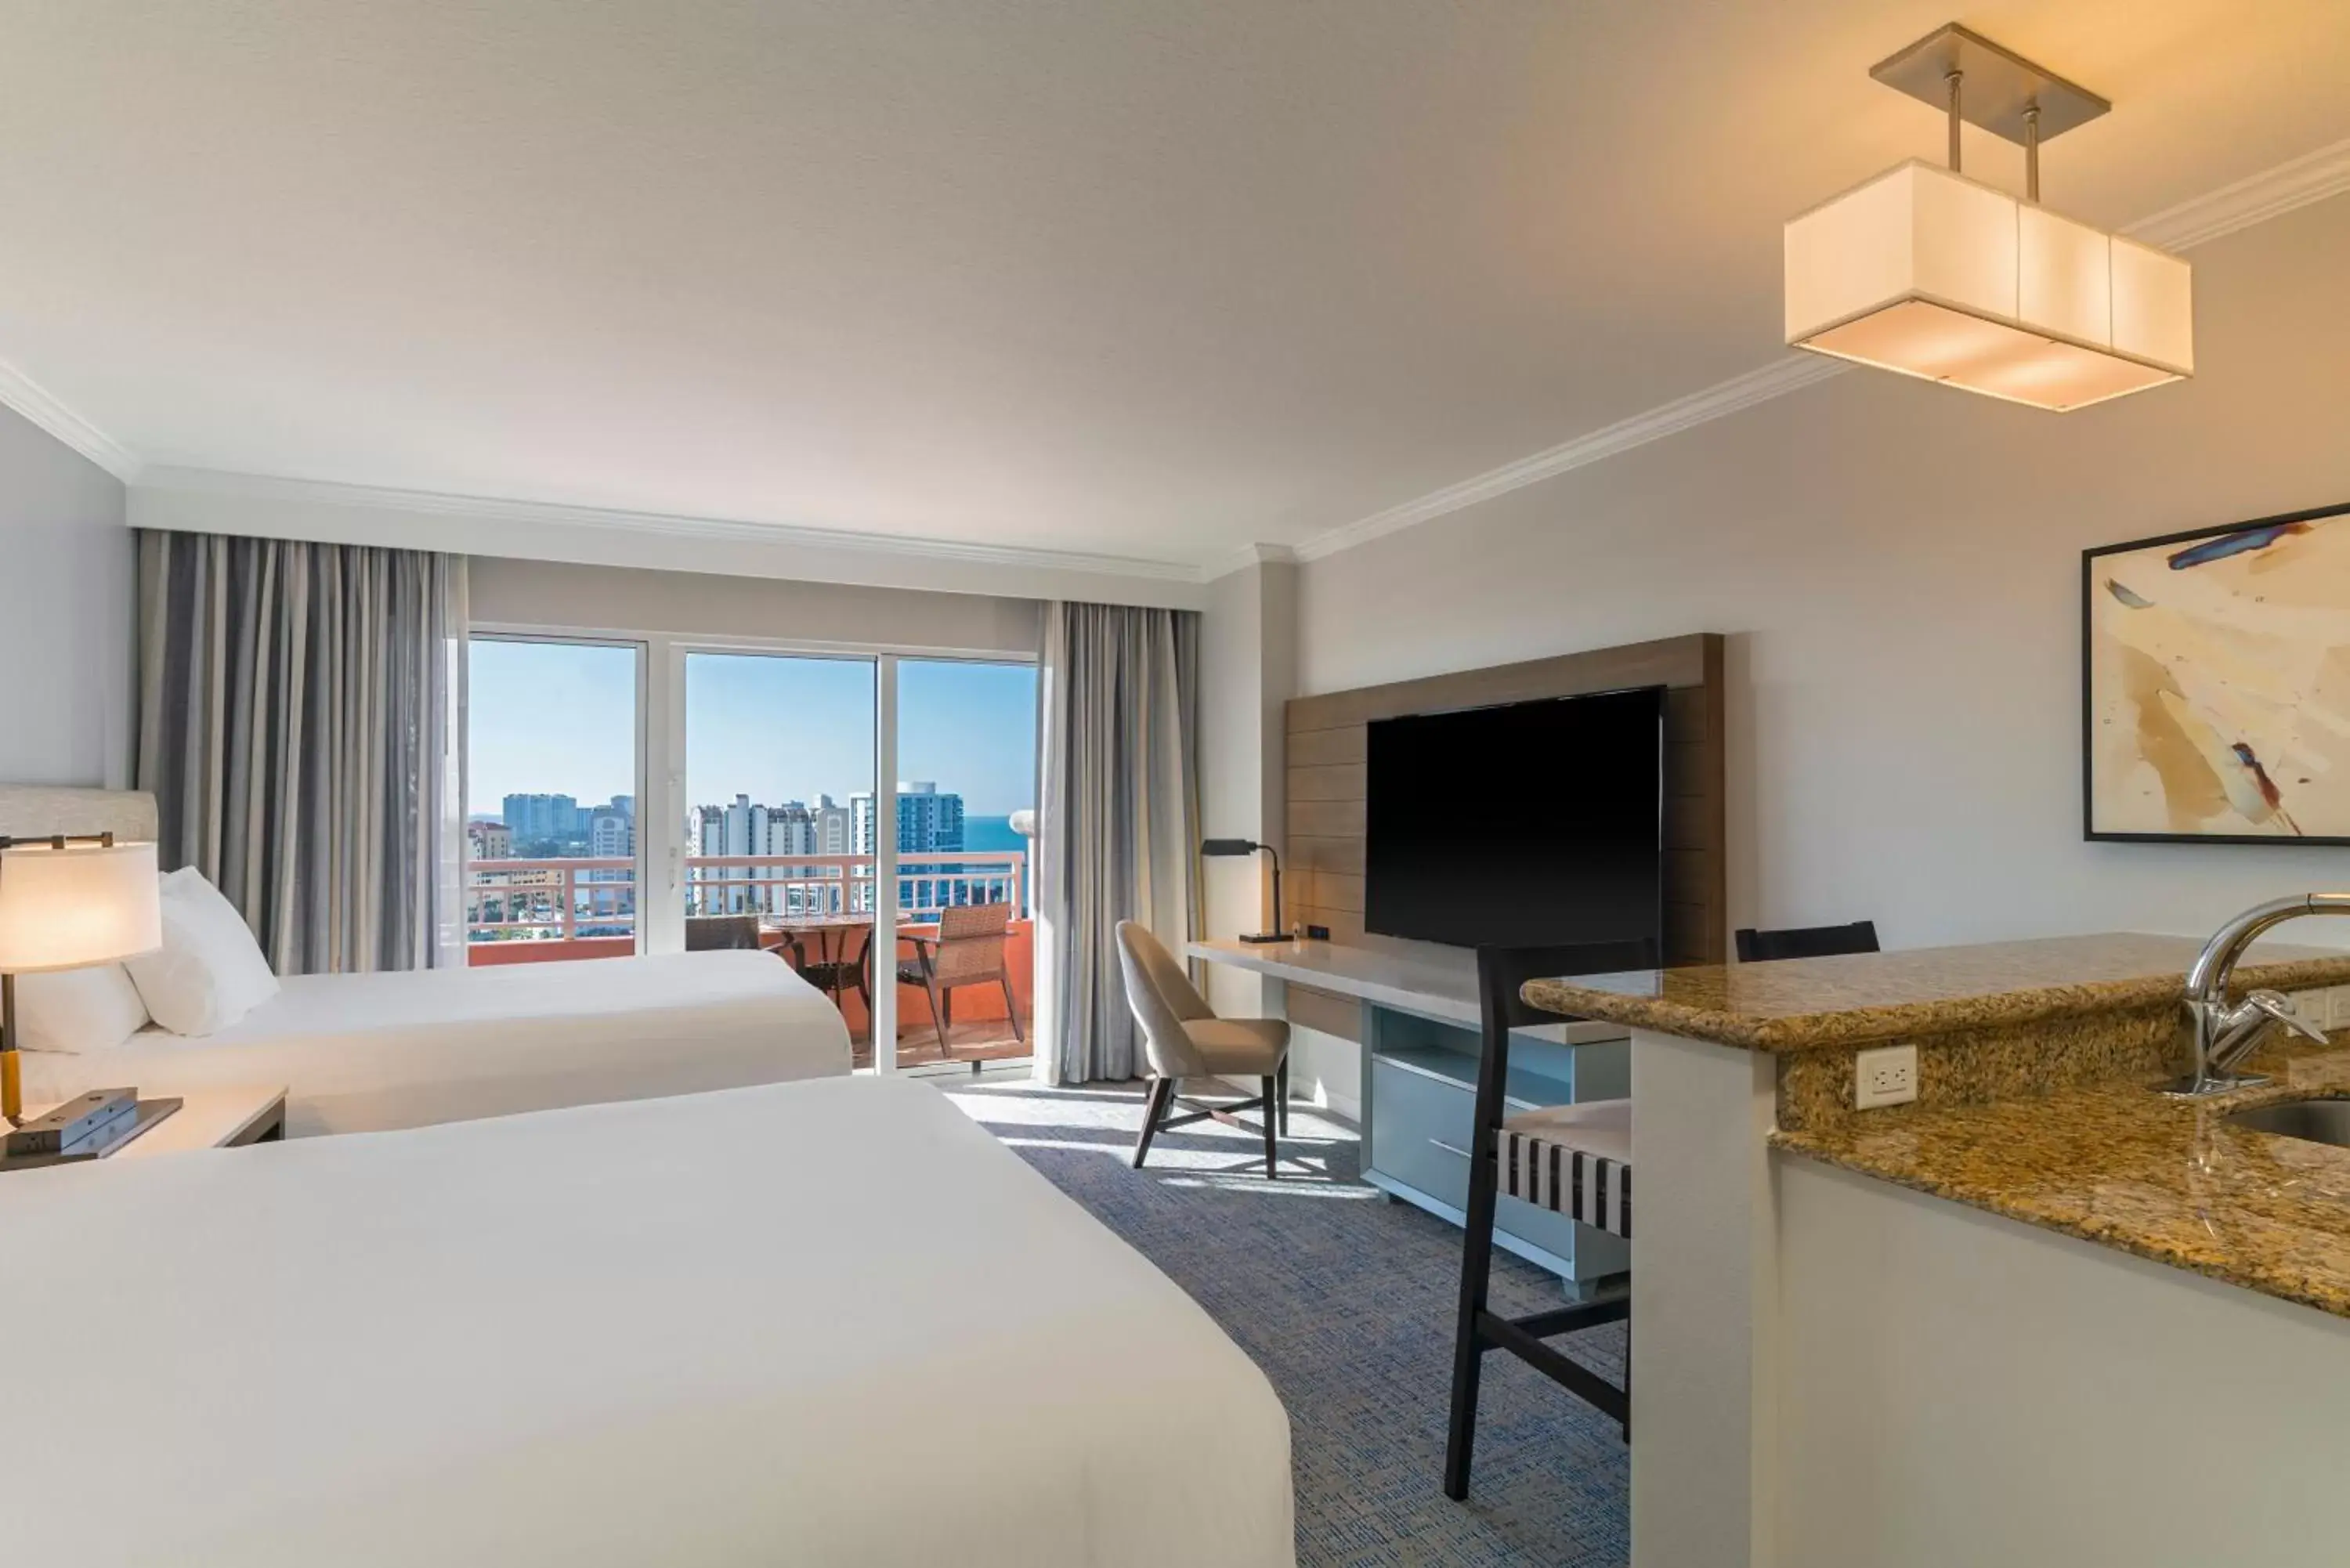 Premium Room with Two Queen Beds and Ocean View in Hyatt Regency Clearwater Beach Resort & Spa